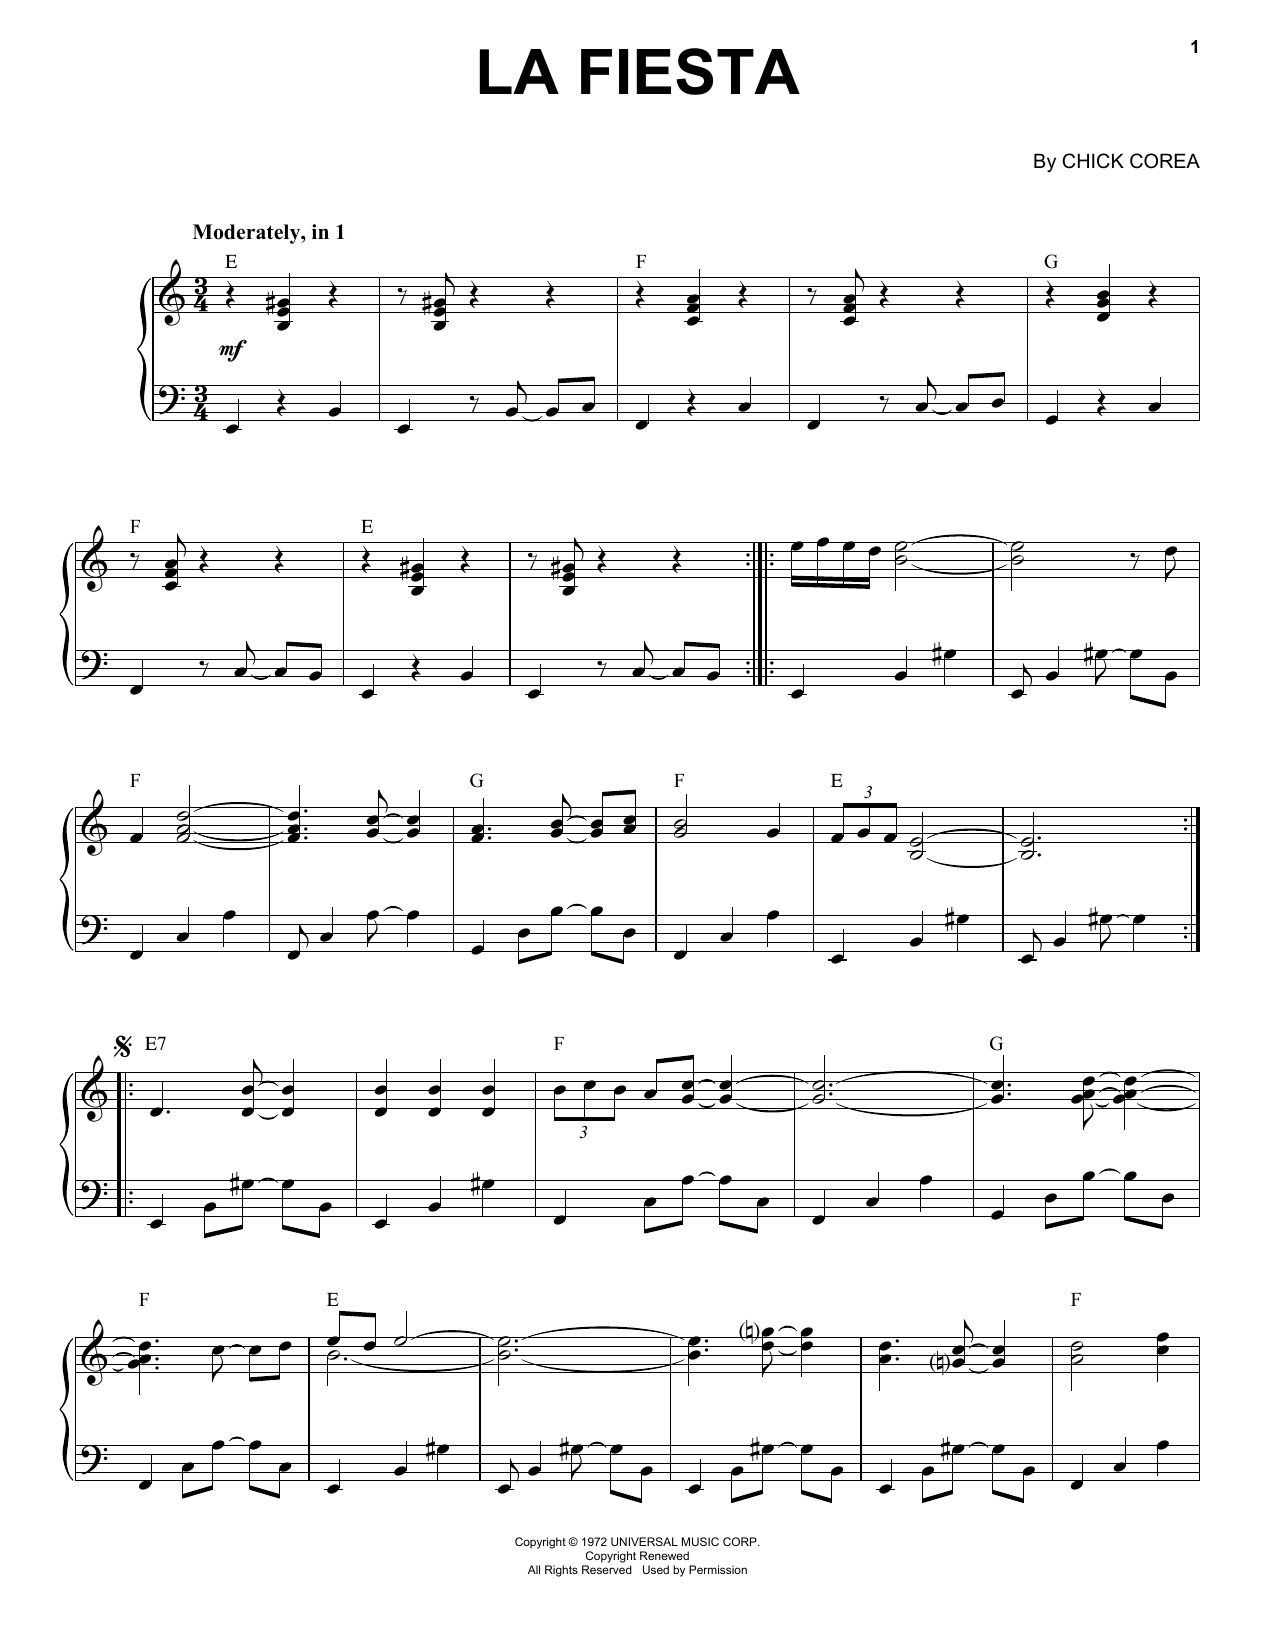 Chick Corea La Fiesta Sheet Music Notes & Chords for Piano Transcription - Download or Print PDF